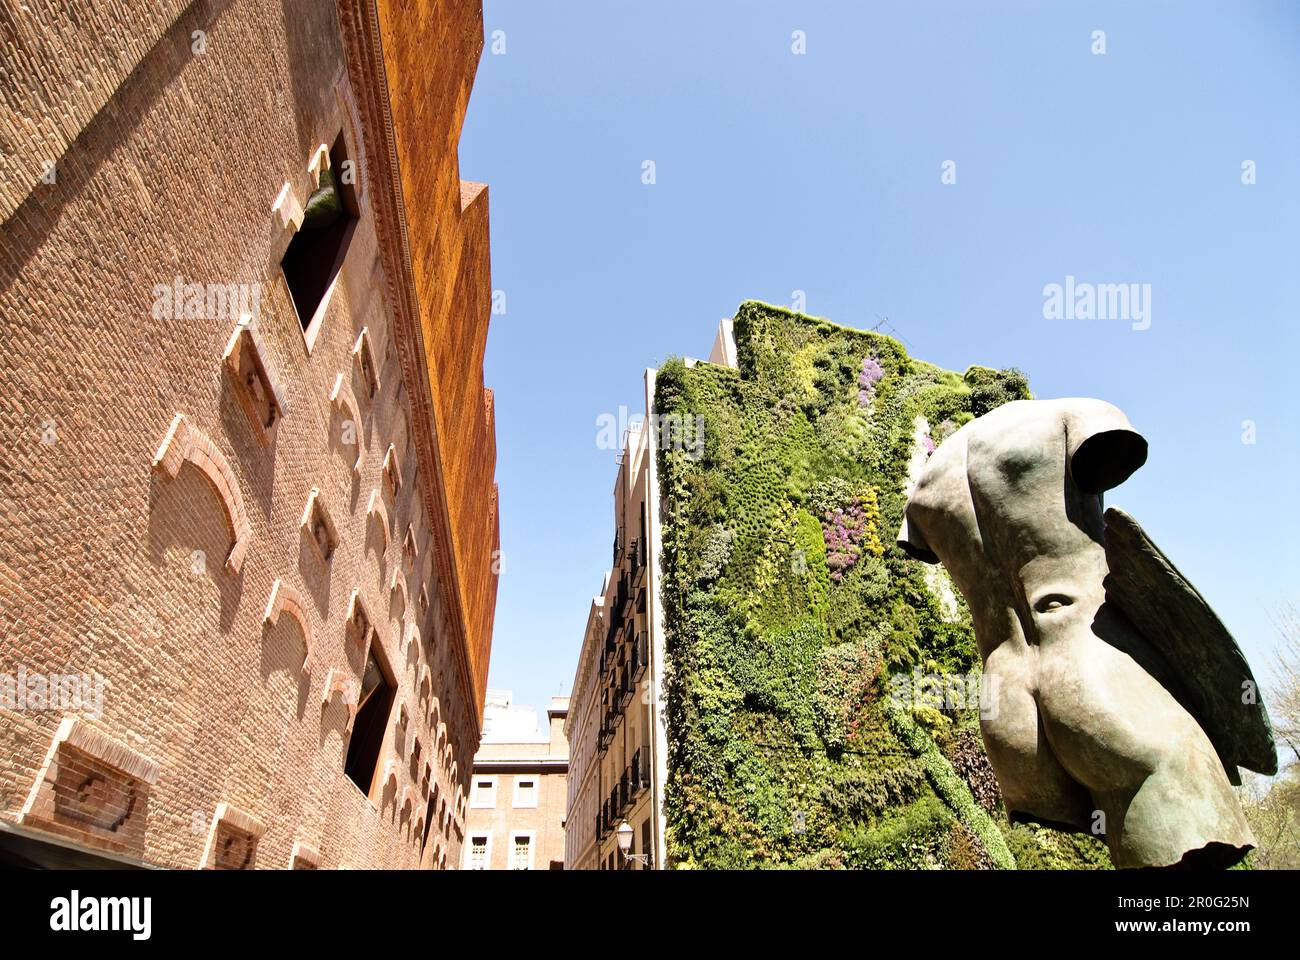 Caixa Forum, from architects Herzog & de Meuron, with sculpture from sculptur Igor Mitoraj, and vertical garden from Patrick Blanc, Madrid, Spain Stock Photo